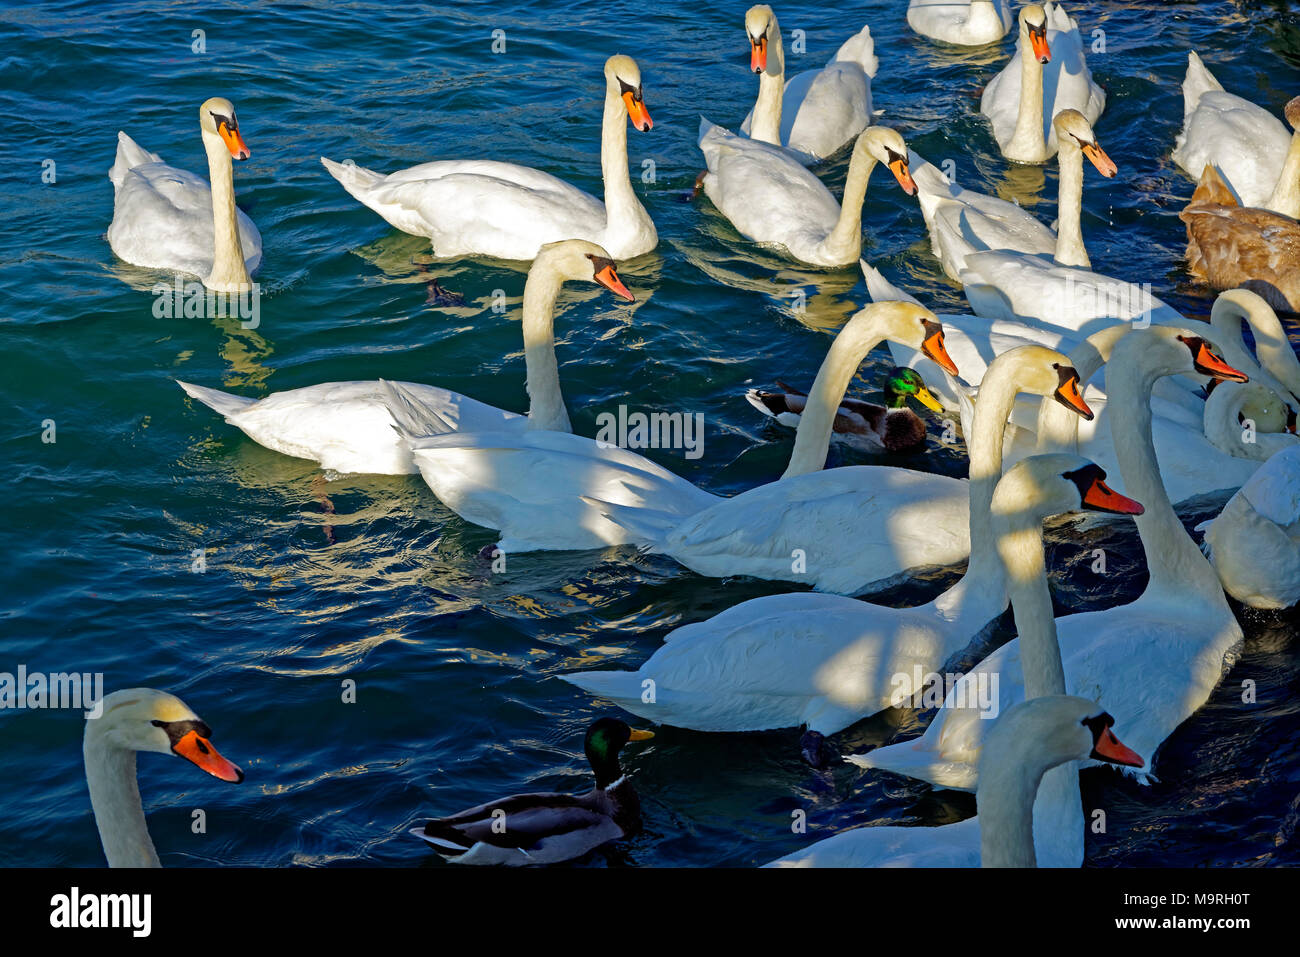 Europe, Switzerland, Genève, Geneva, Geneva, promenade you Lac, Lake Geneva, swans, ducks, gull, lake, water, detail, birds, animals Stock Photo